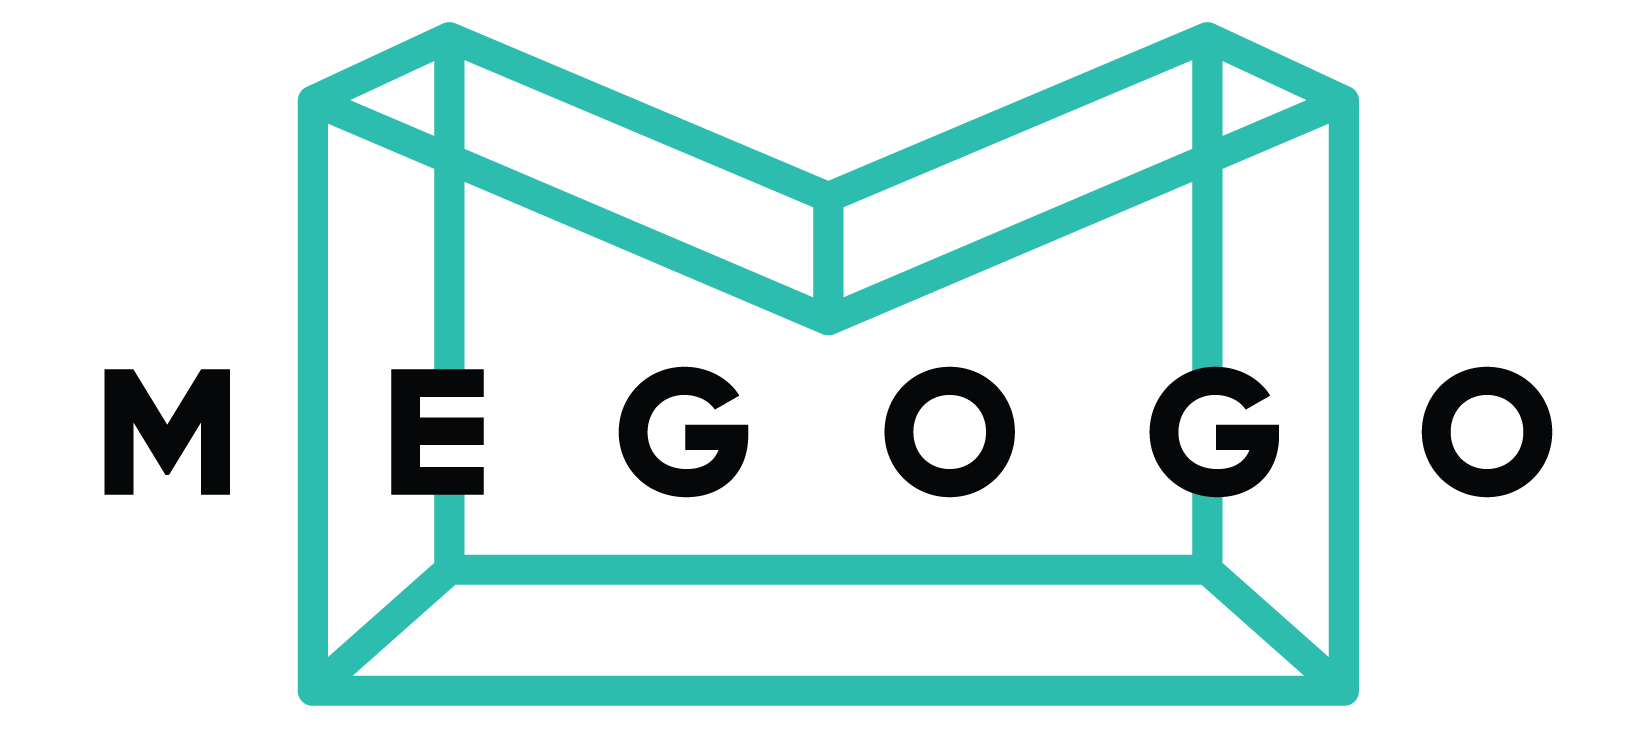 megogo-logo